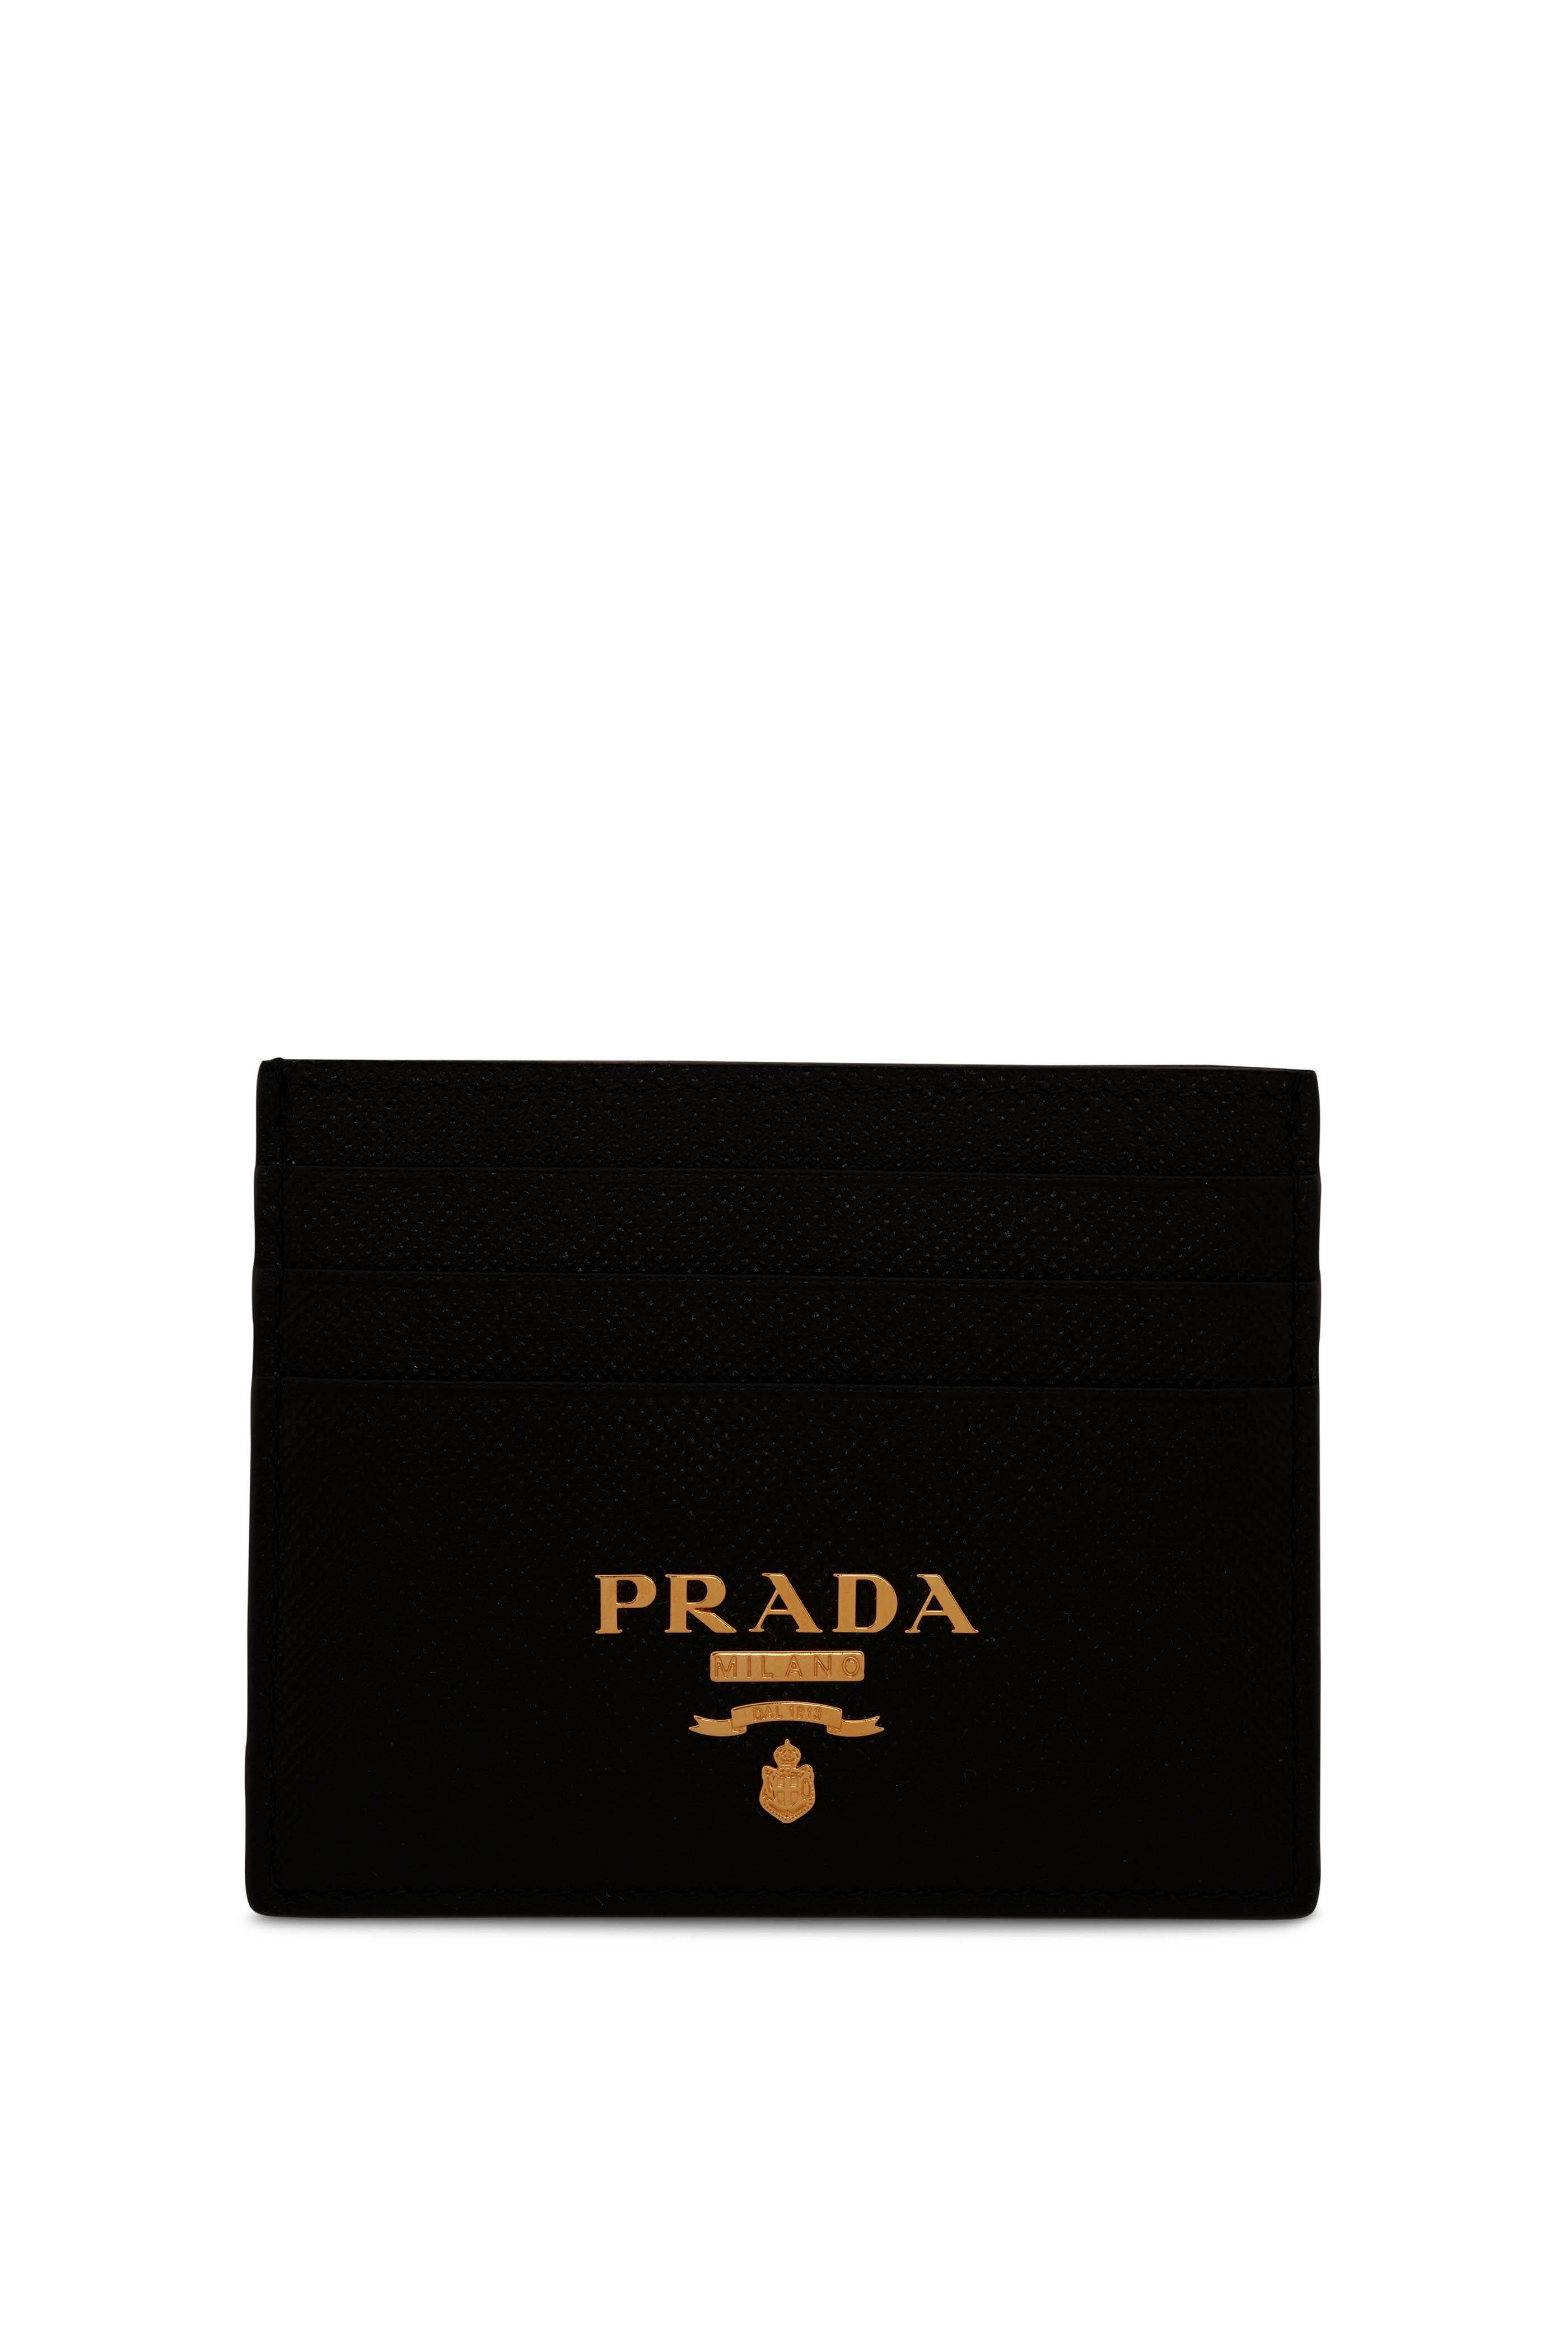 Prada Saffiano Leather Cardholder